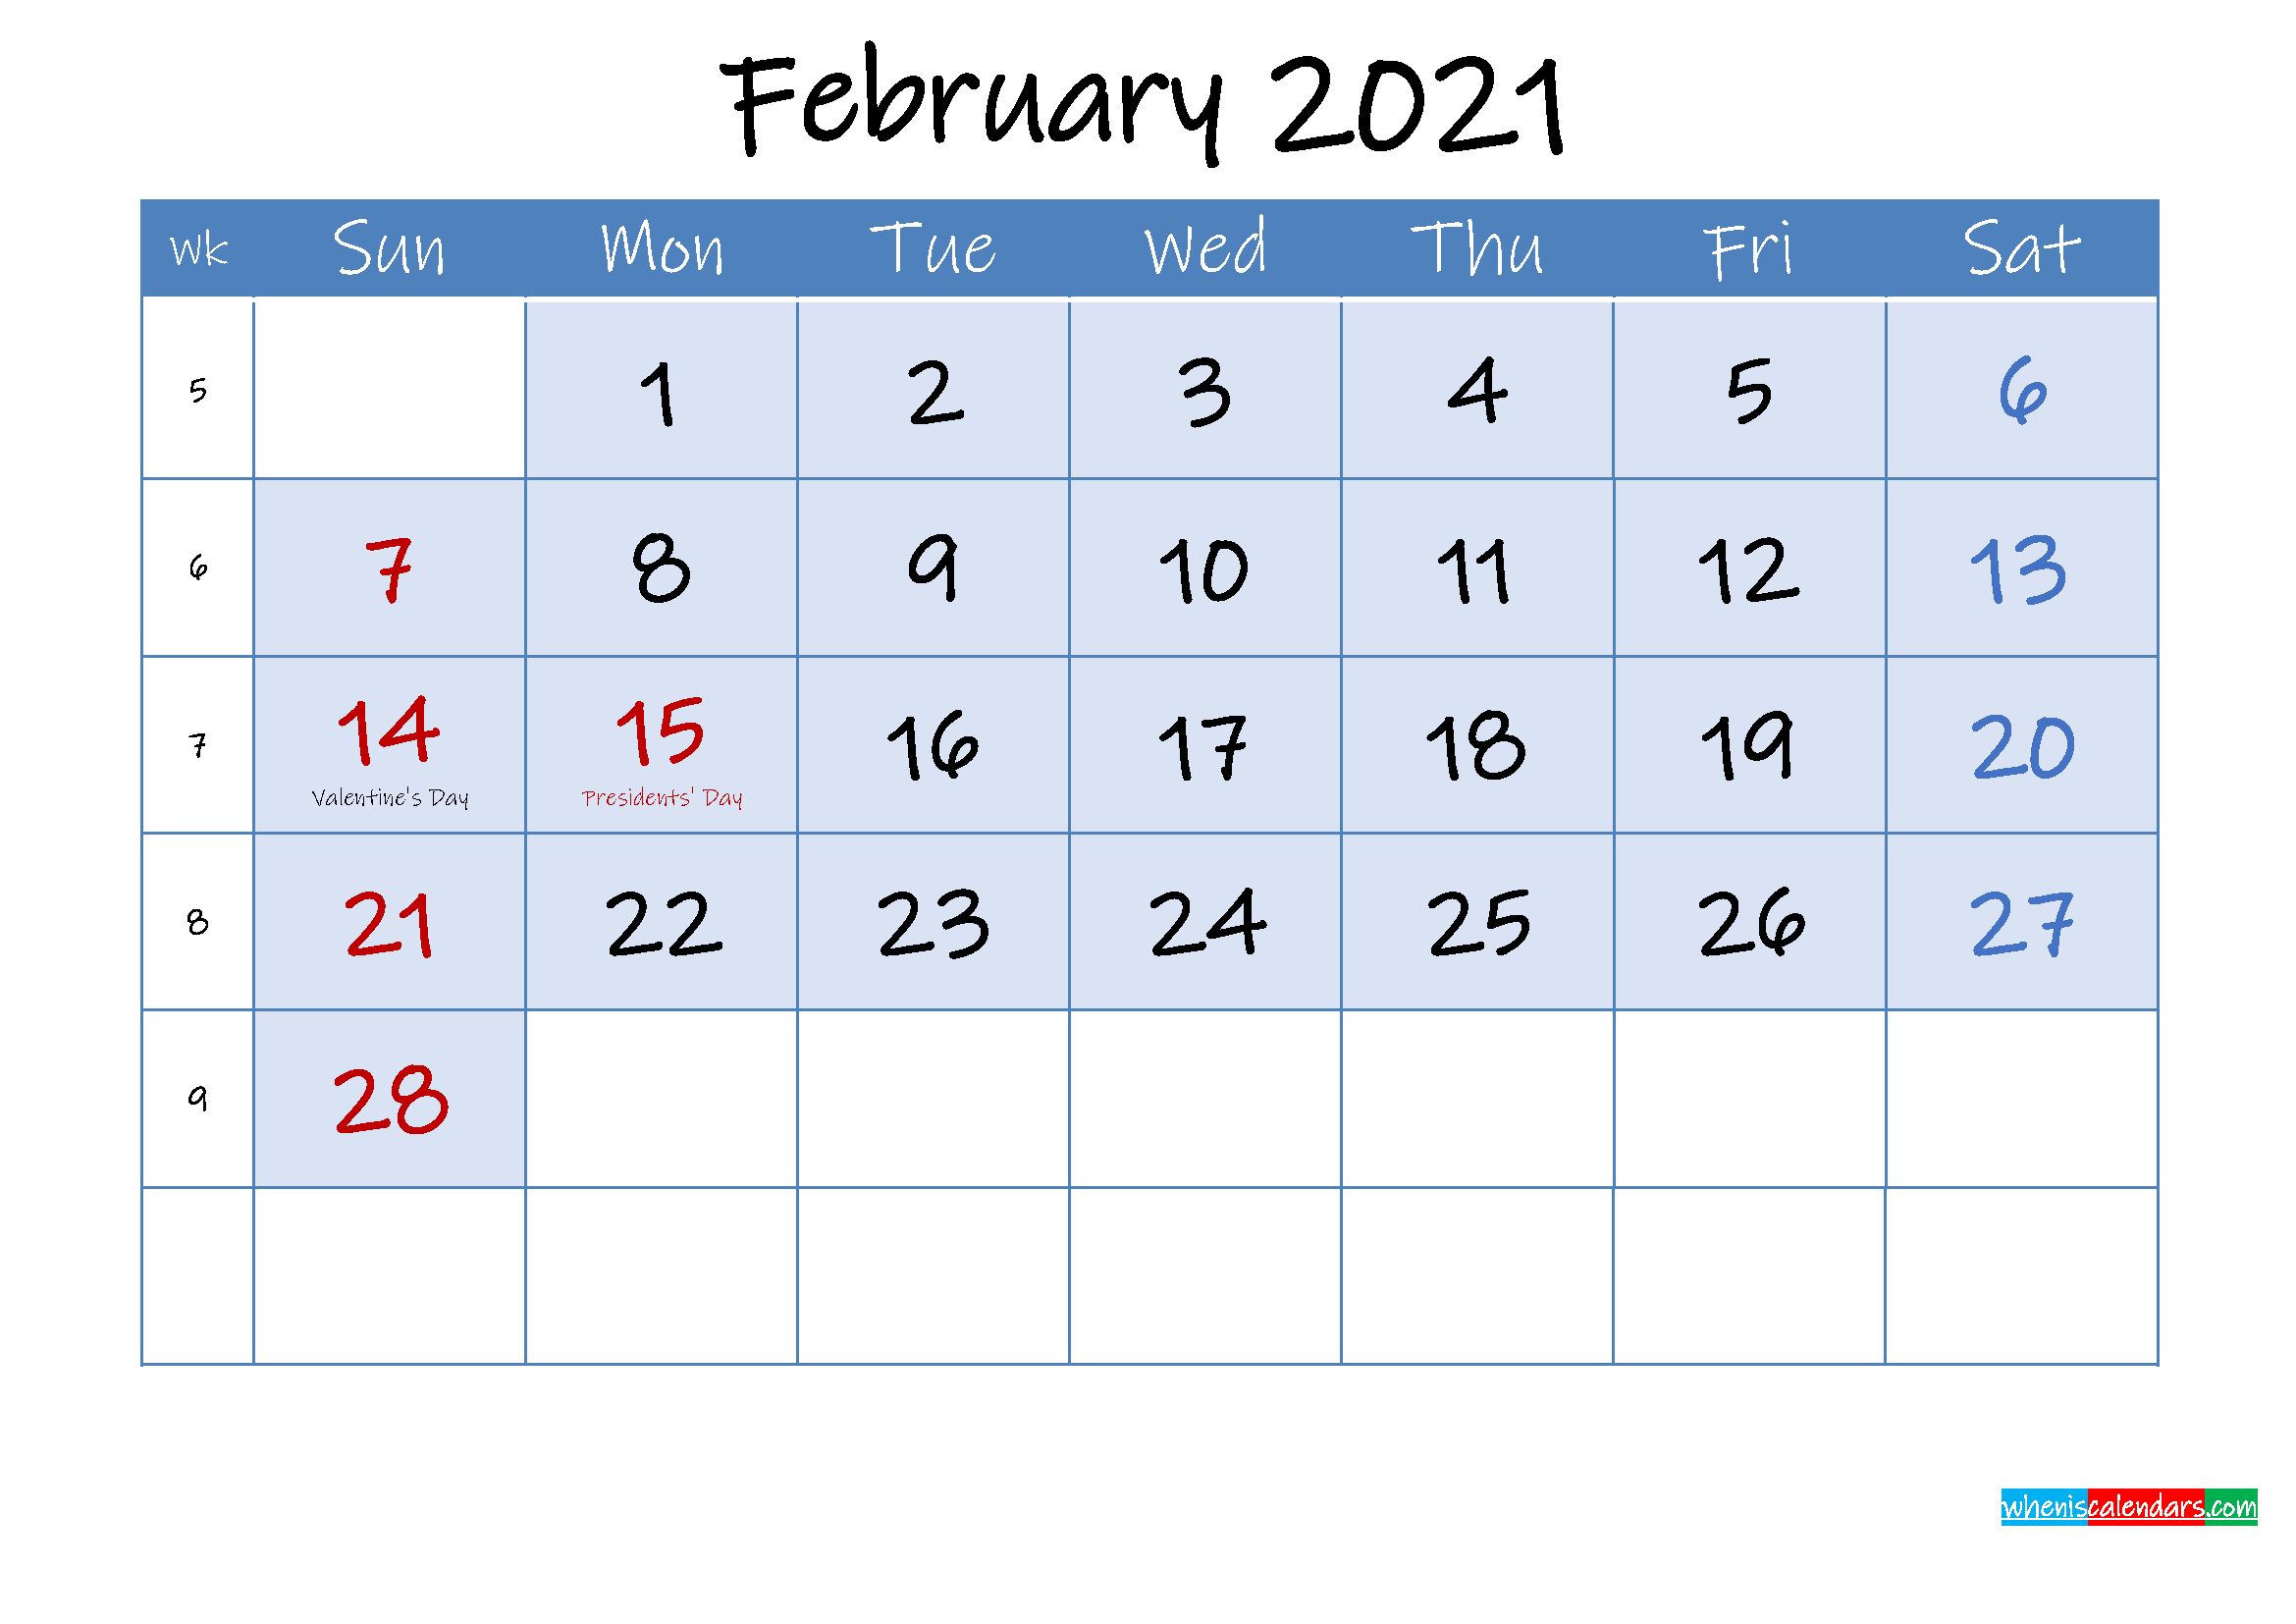 Free Printable February 2021 Calendar - Template Ink21M98-February Calendar 2021